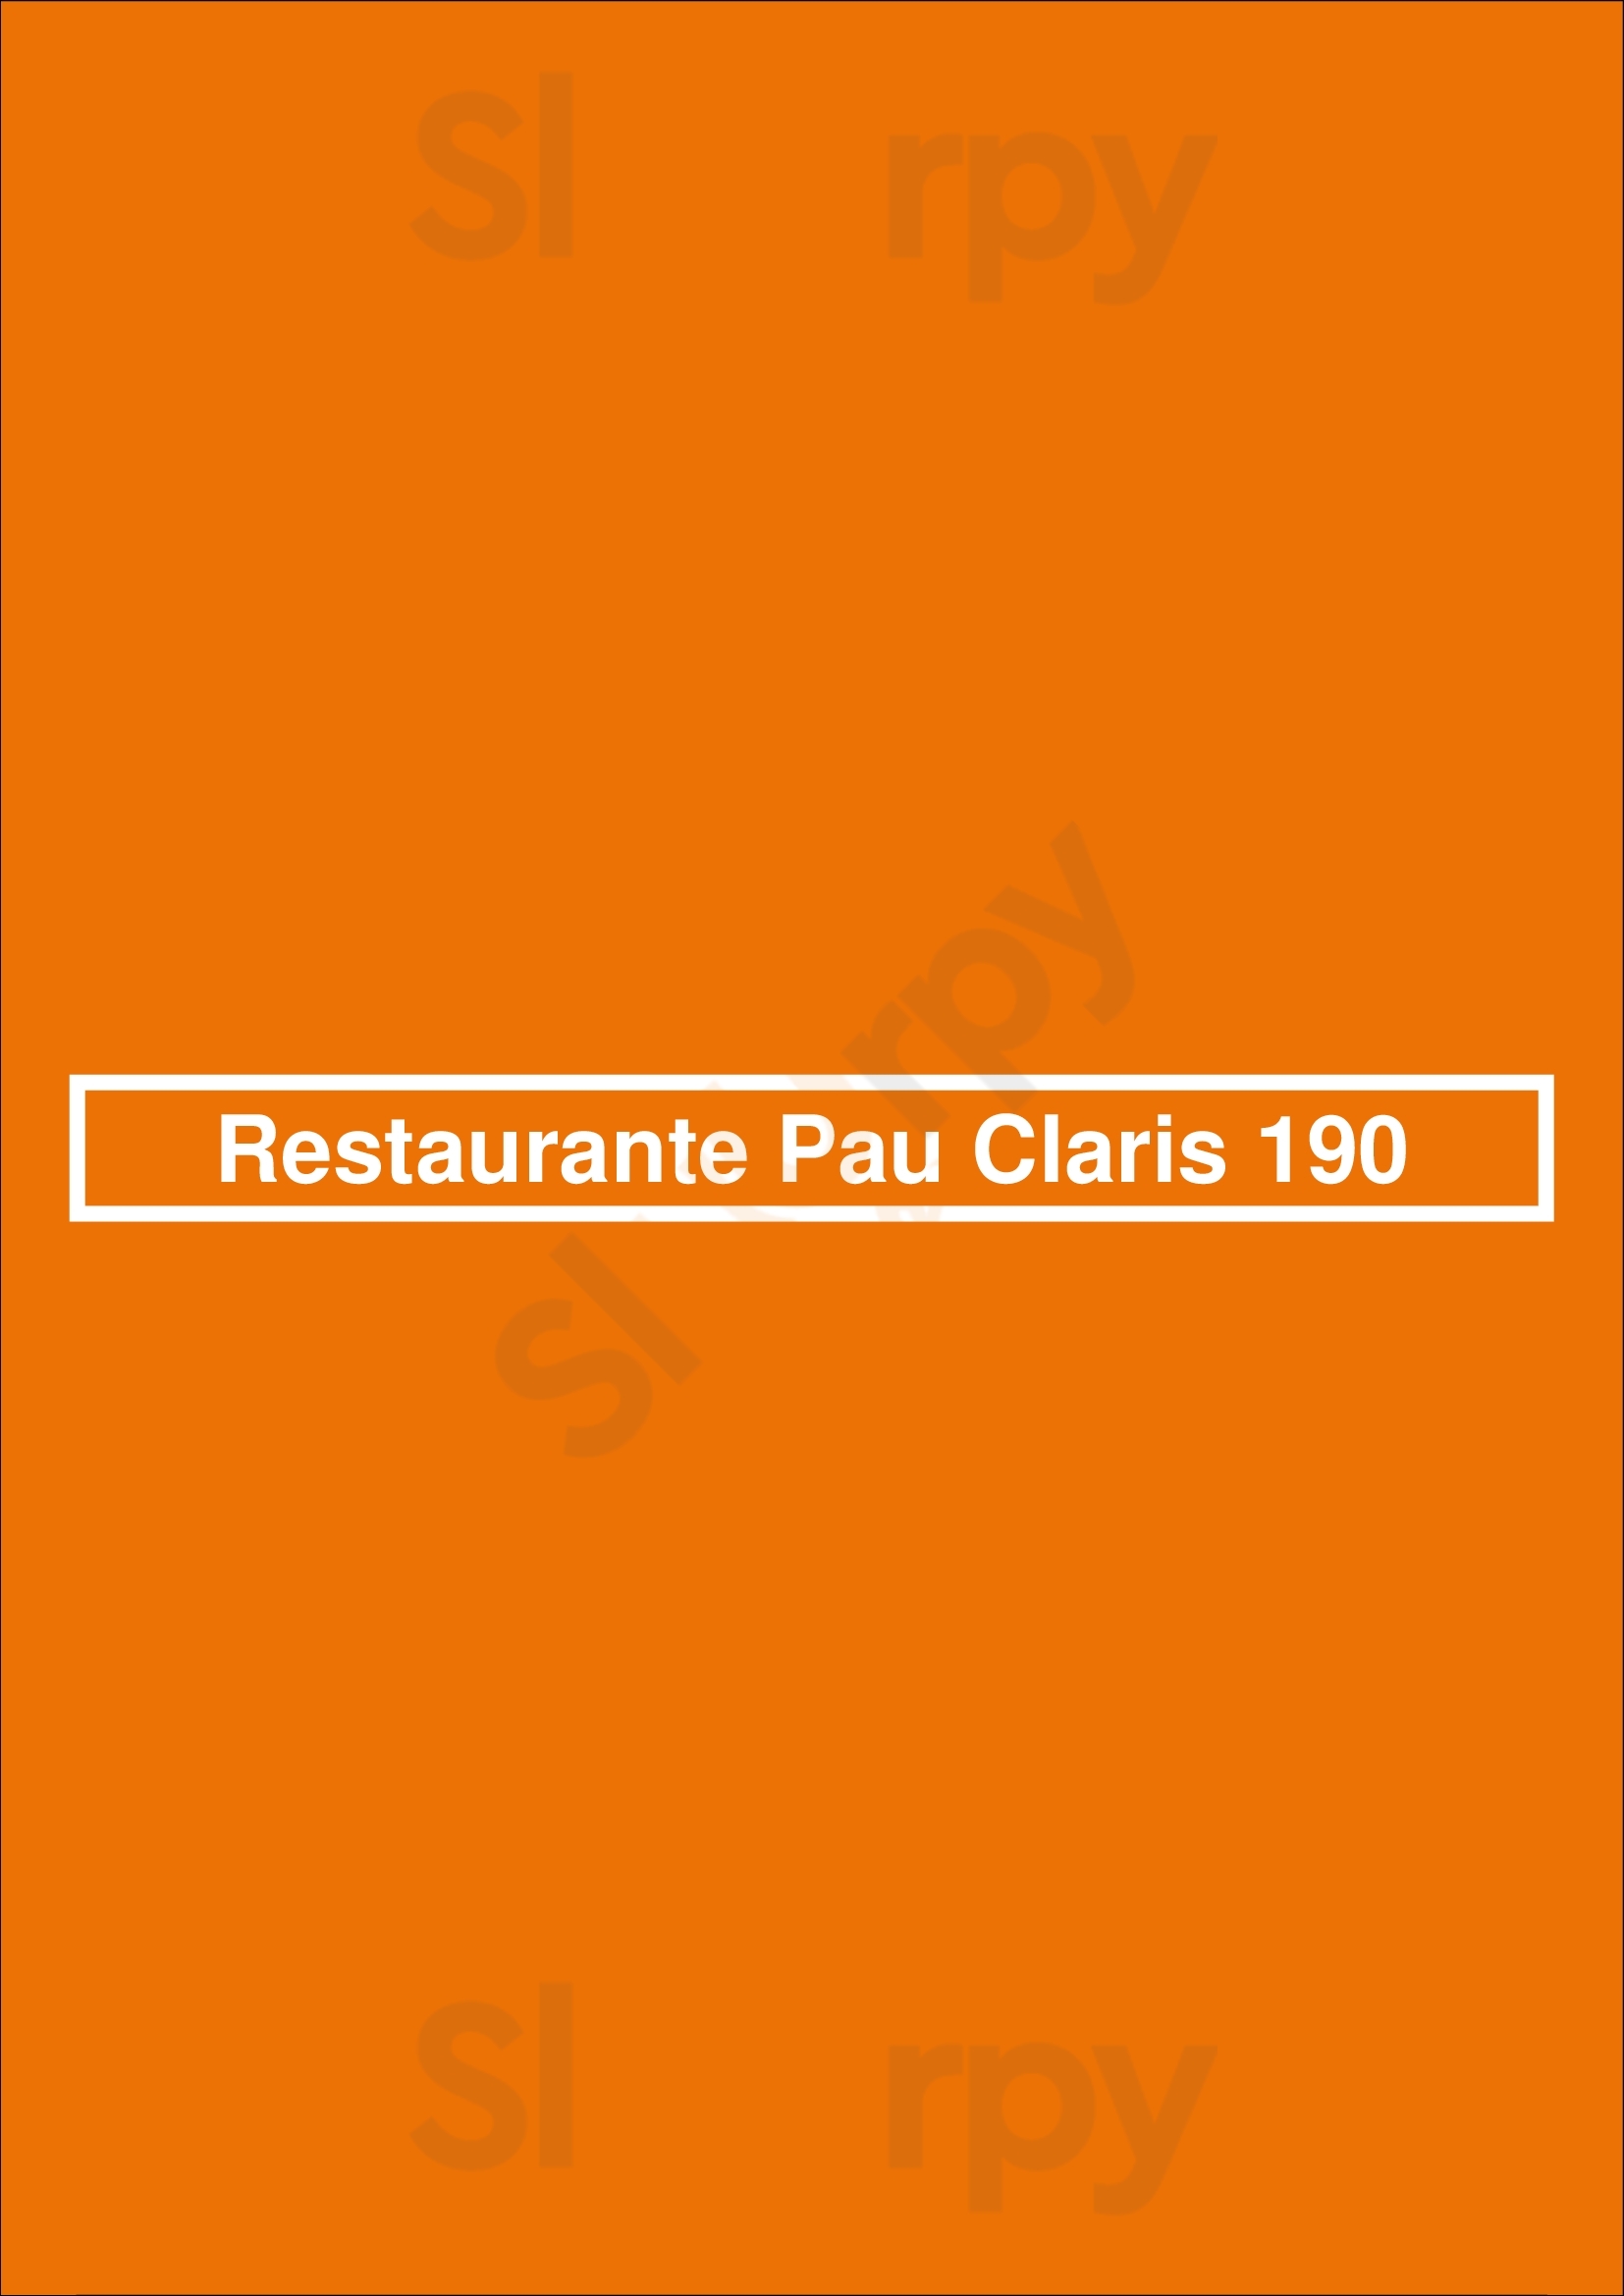 Restaurante Pau Claris 190 Barcelona Menu - 1